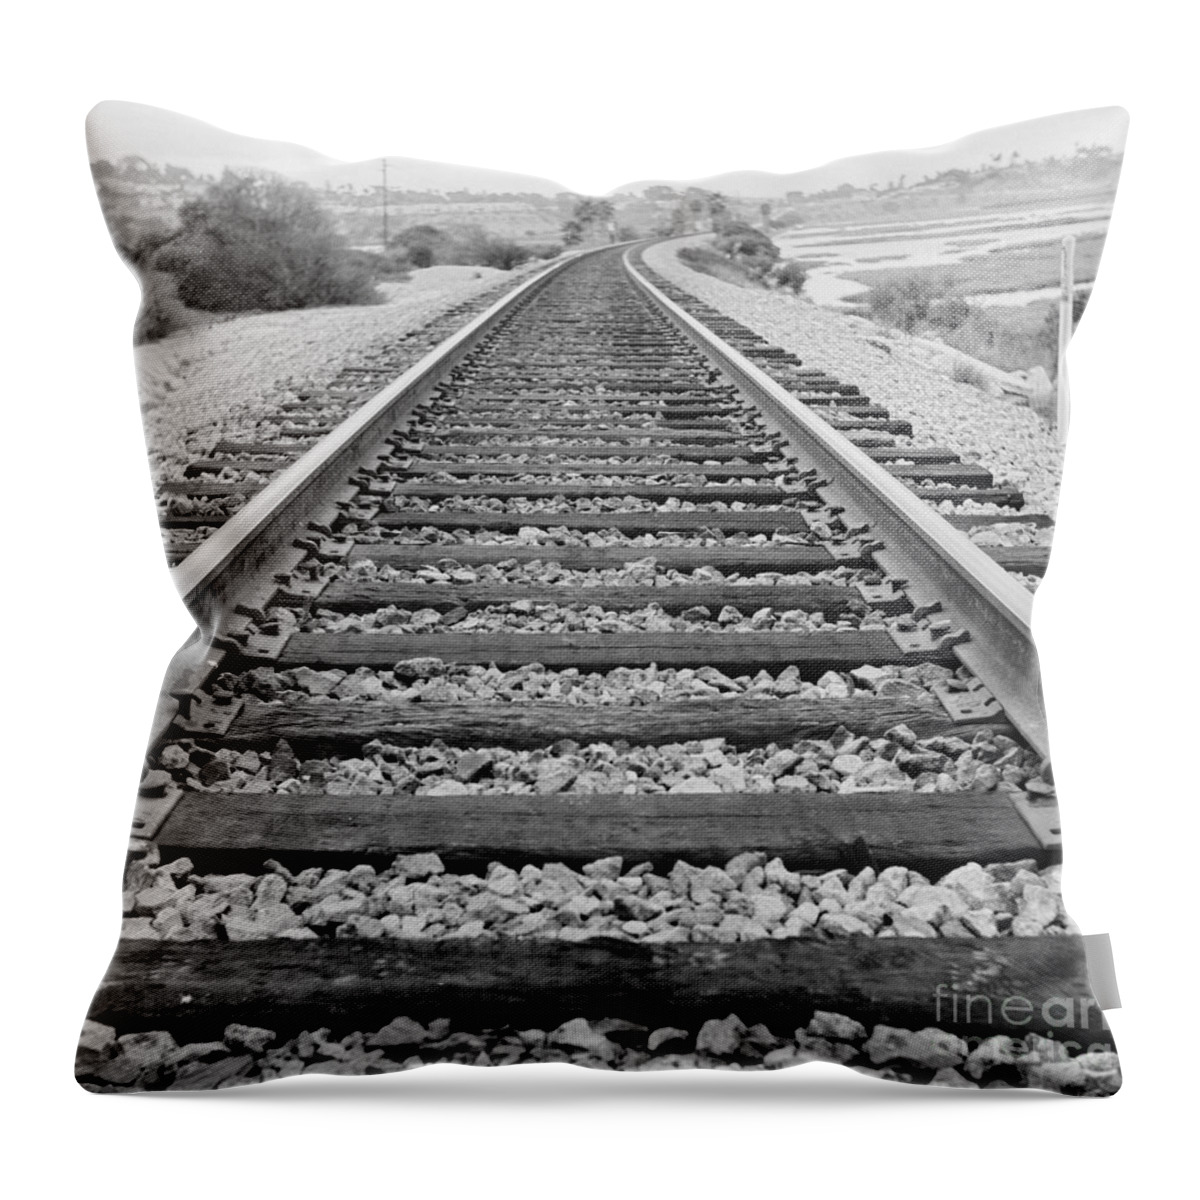 Railroad Throw Pillow featuring the photograph Knighton078 by Daniel Knighton